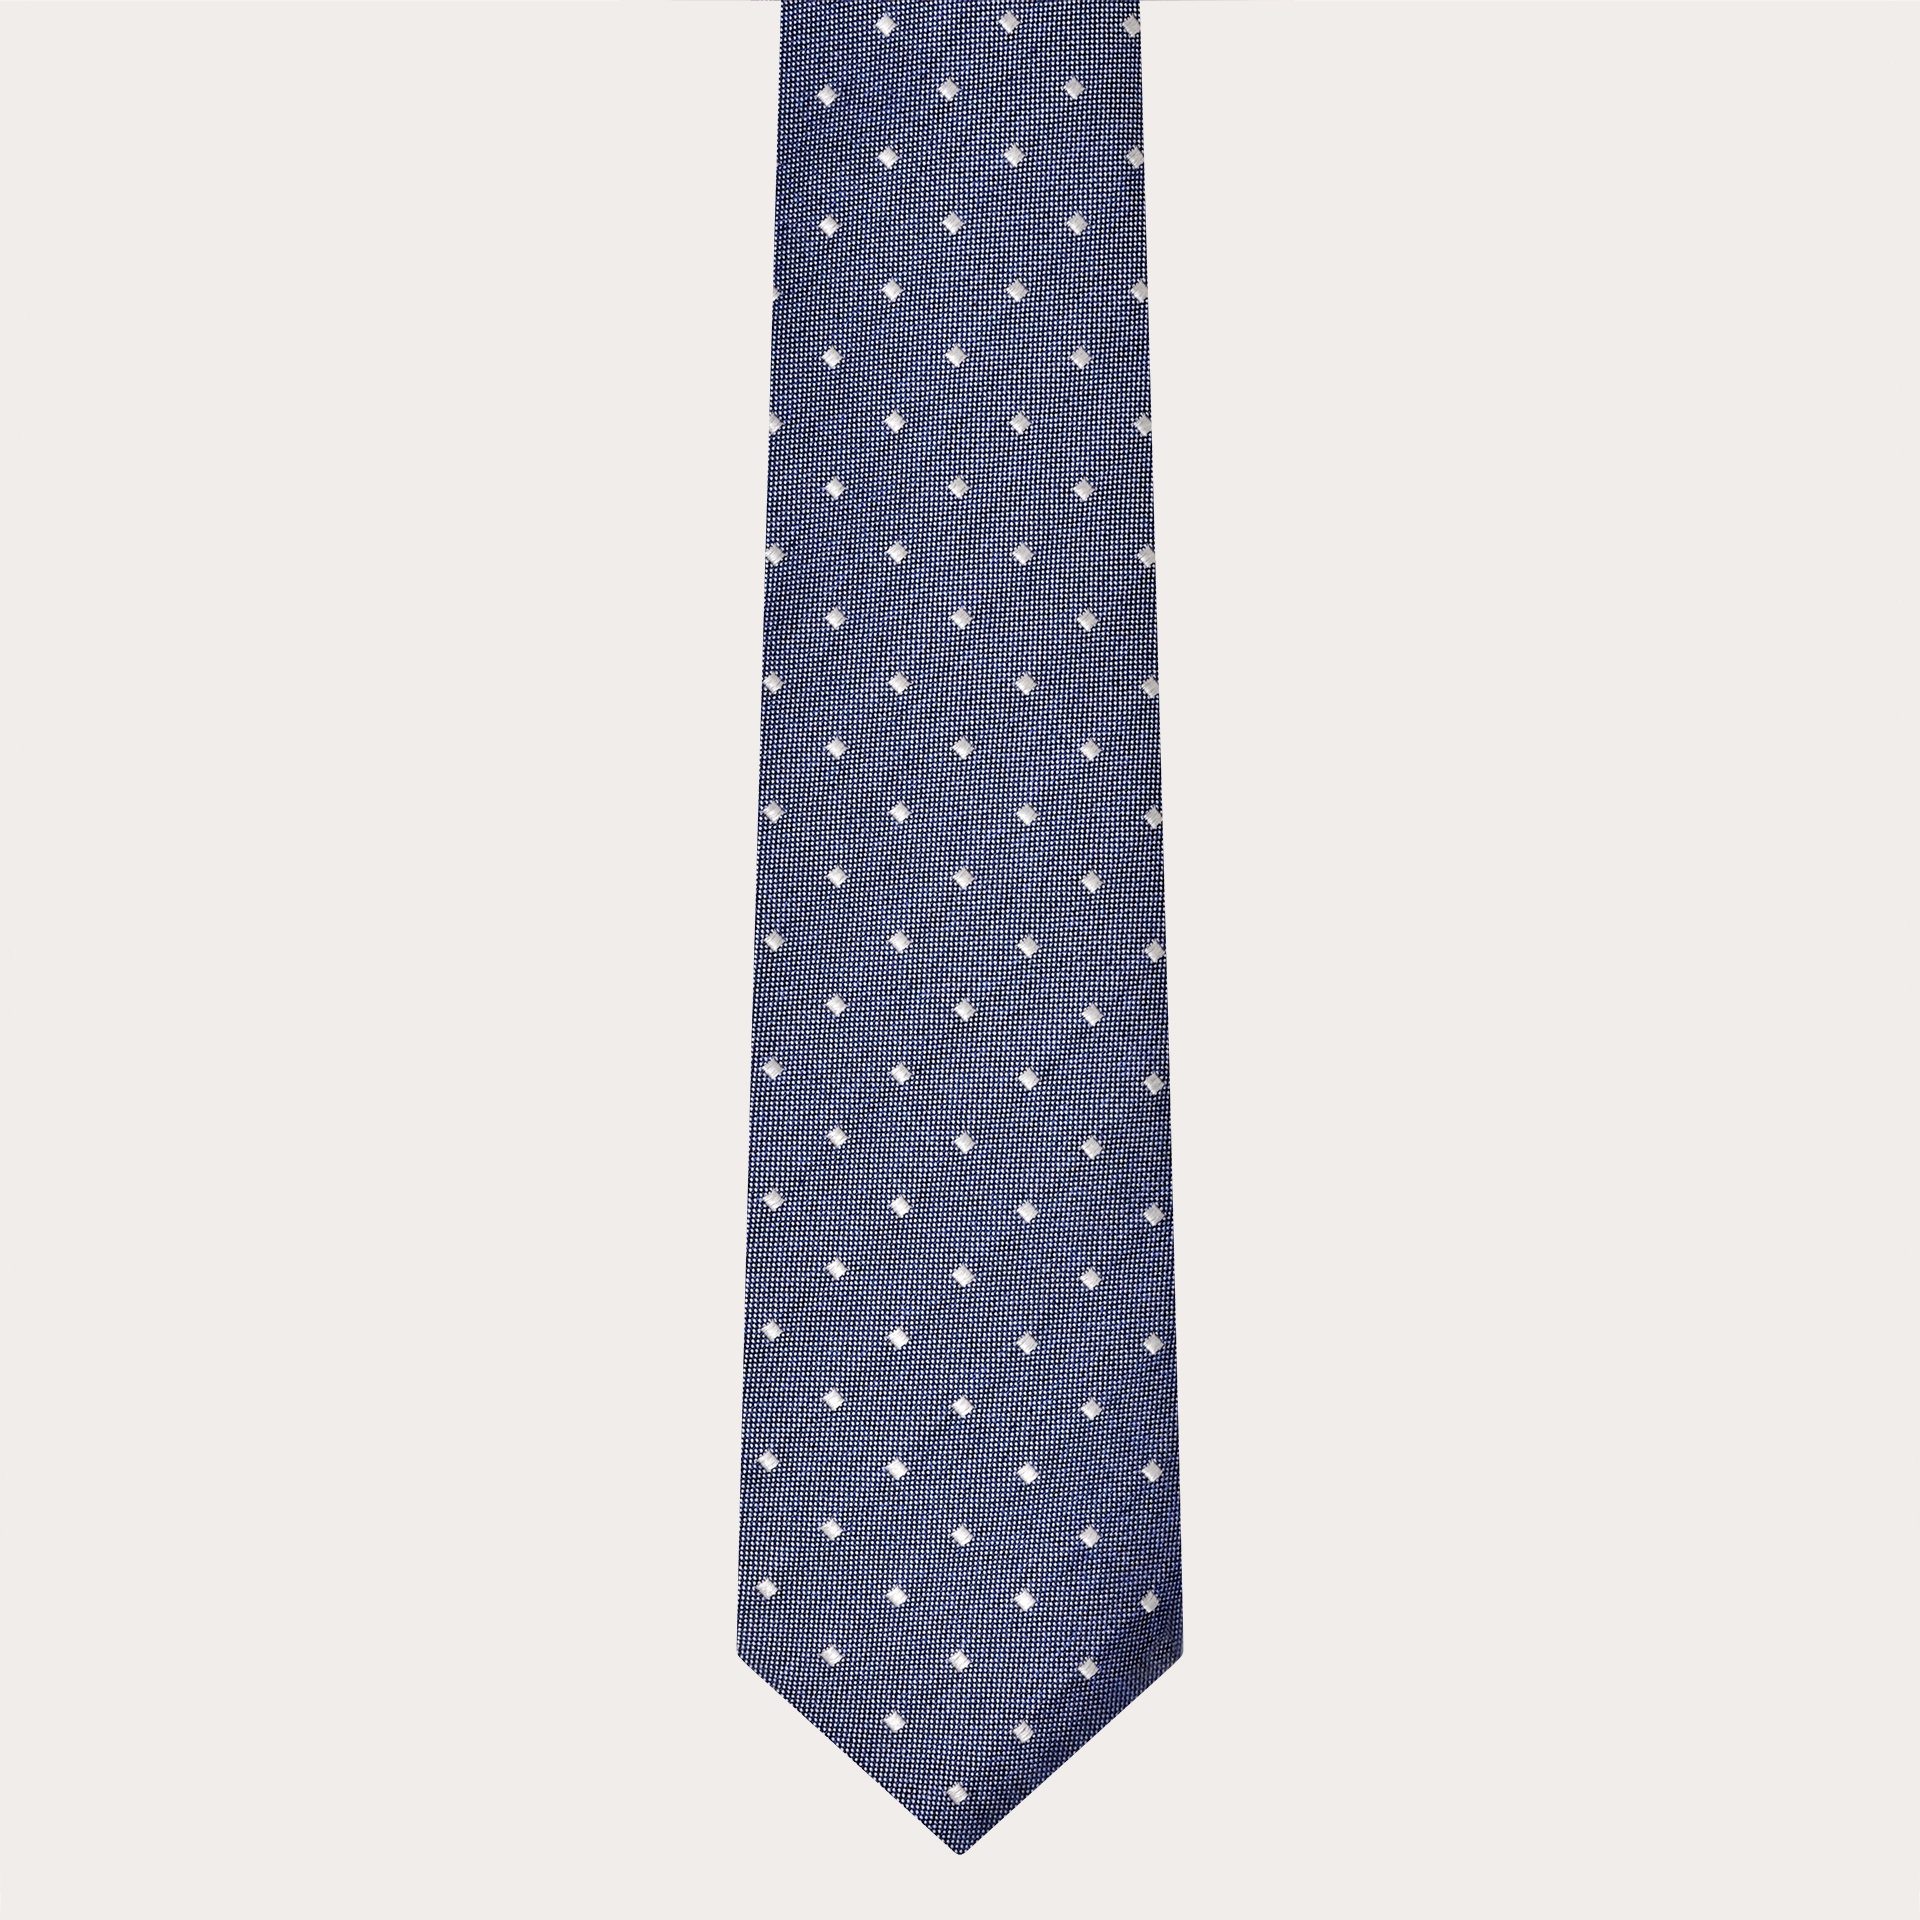 BRUCLE Elegante Krawatte aus Jacquard-Seide, hellblau meliert mit perlmuttfarbenen Karos